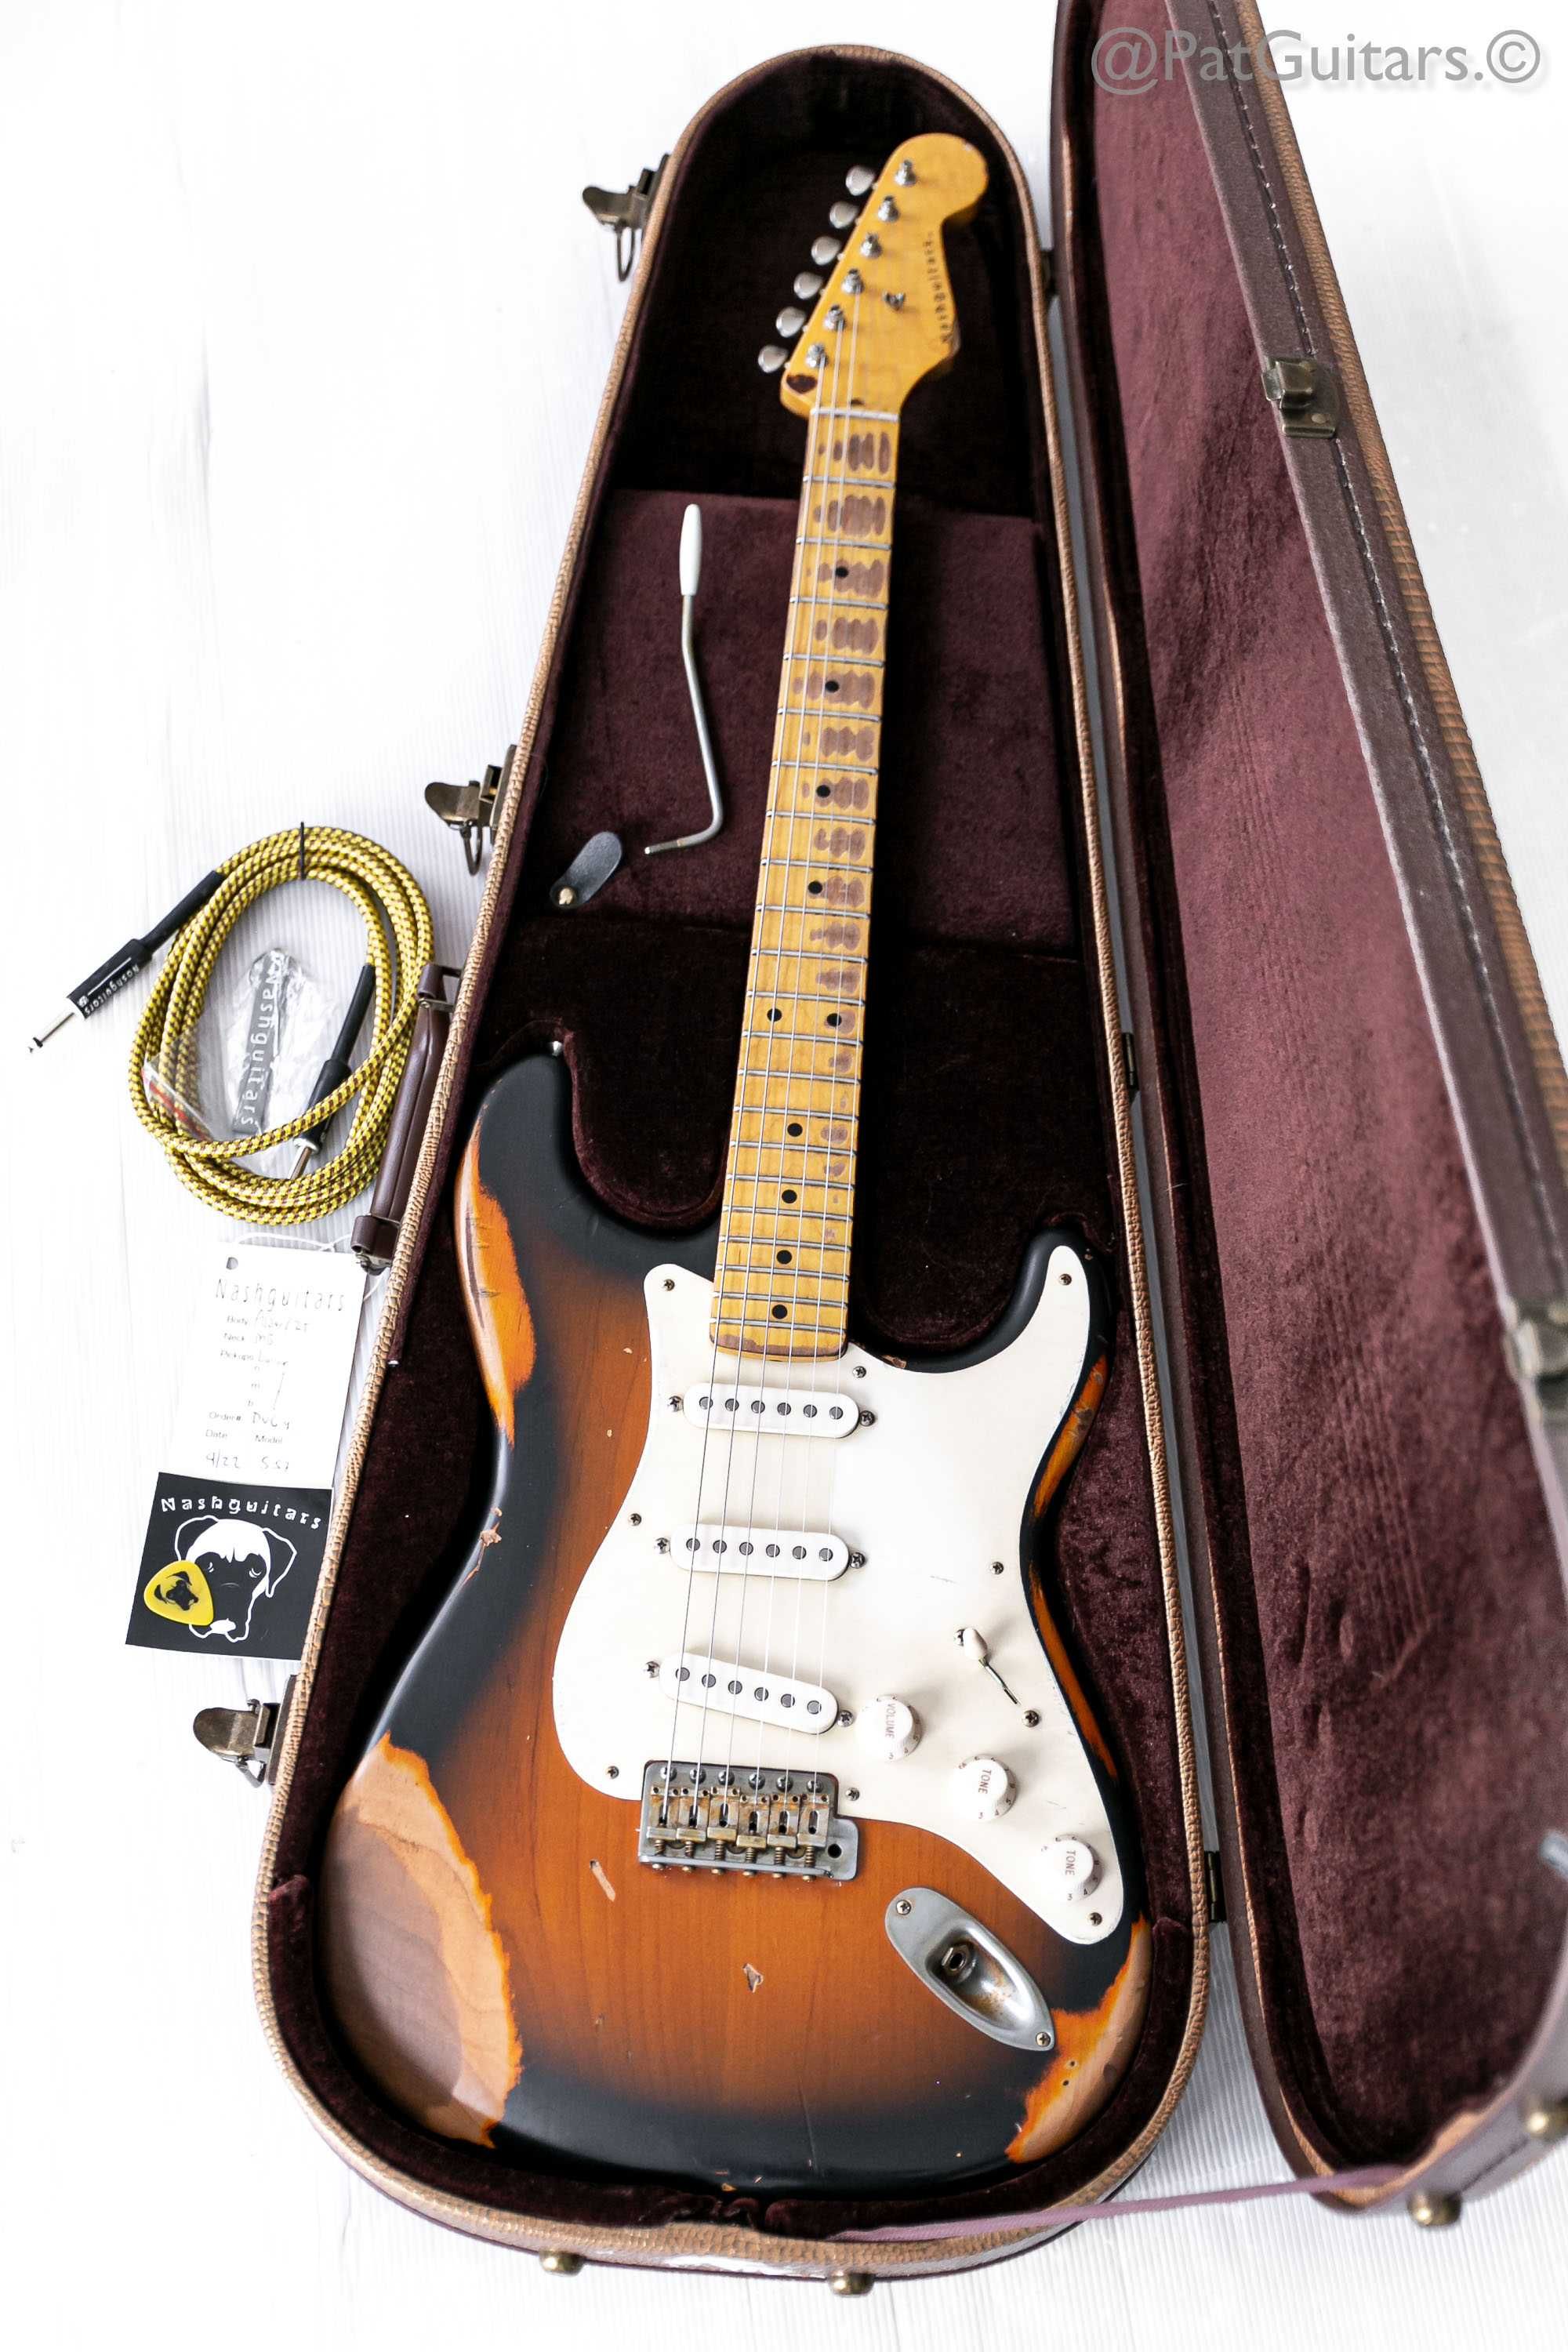 2022 Nash S-57 Stratocaster in Two Tone Sunburst 7.9lbs